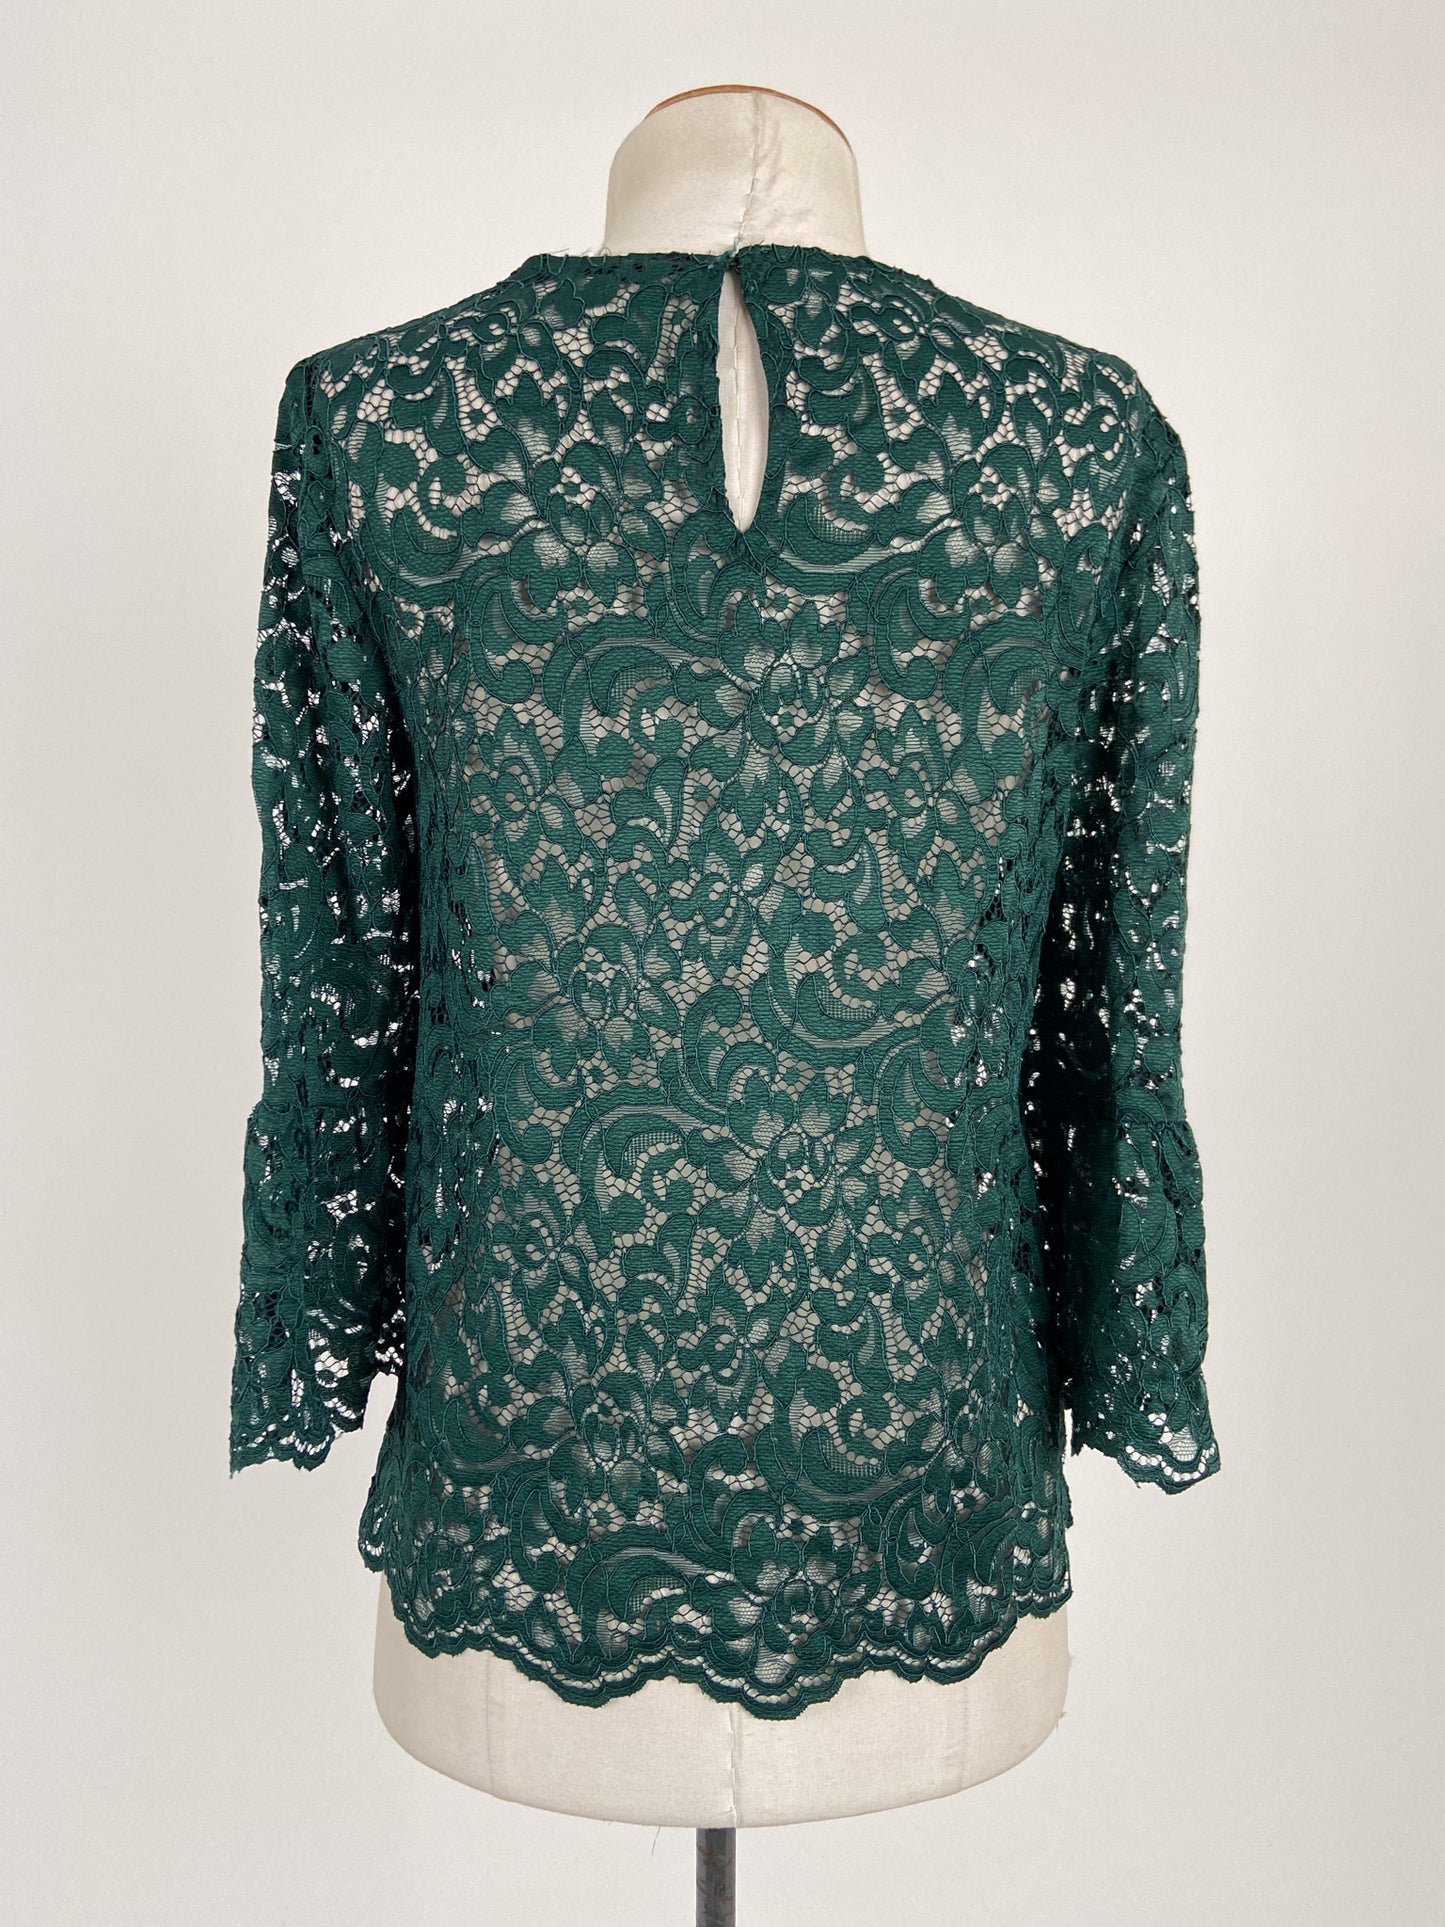 Zara | Green Workwear Top | Size XS